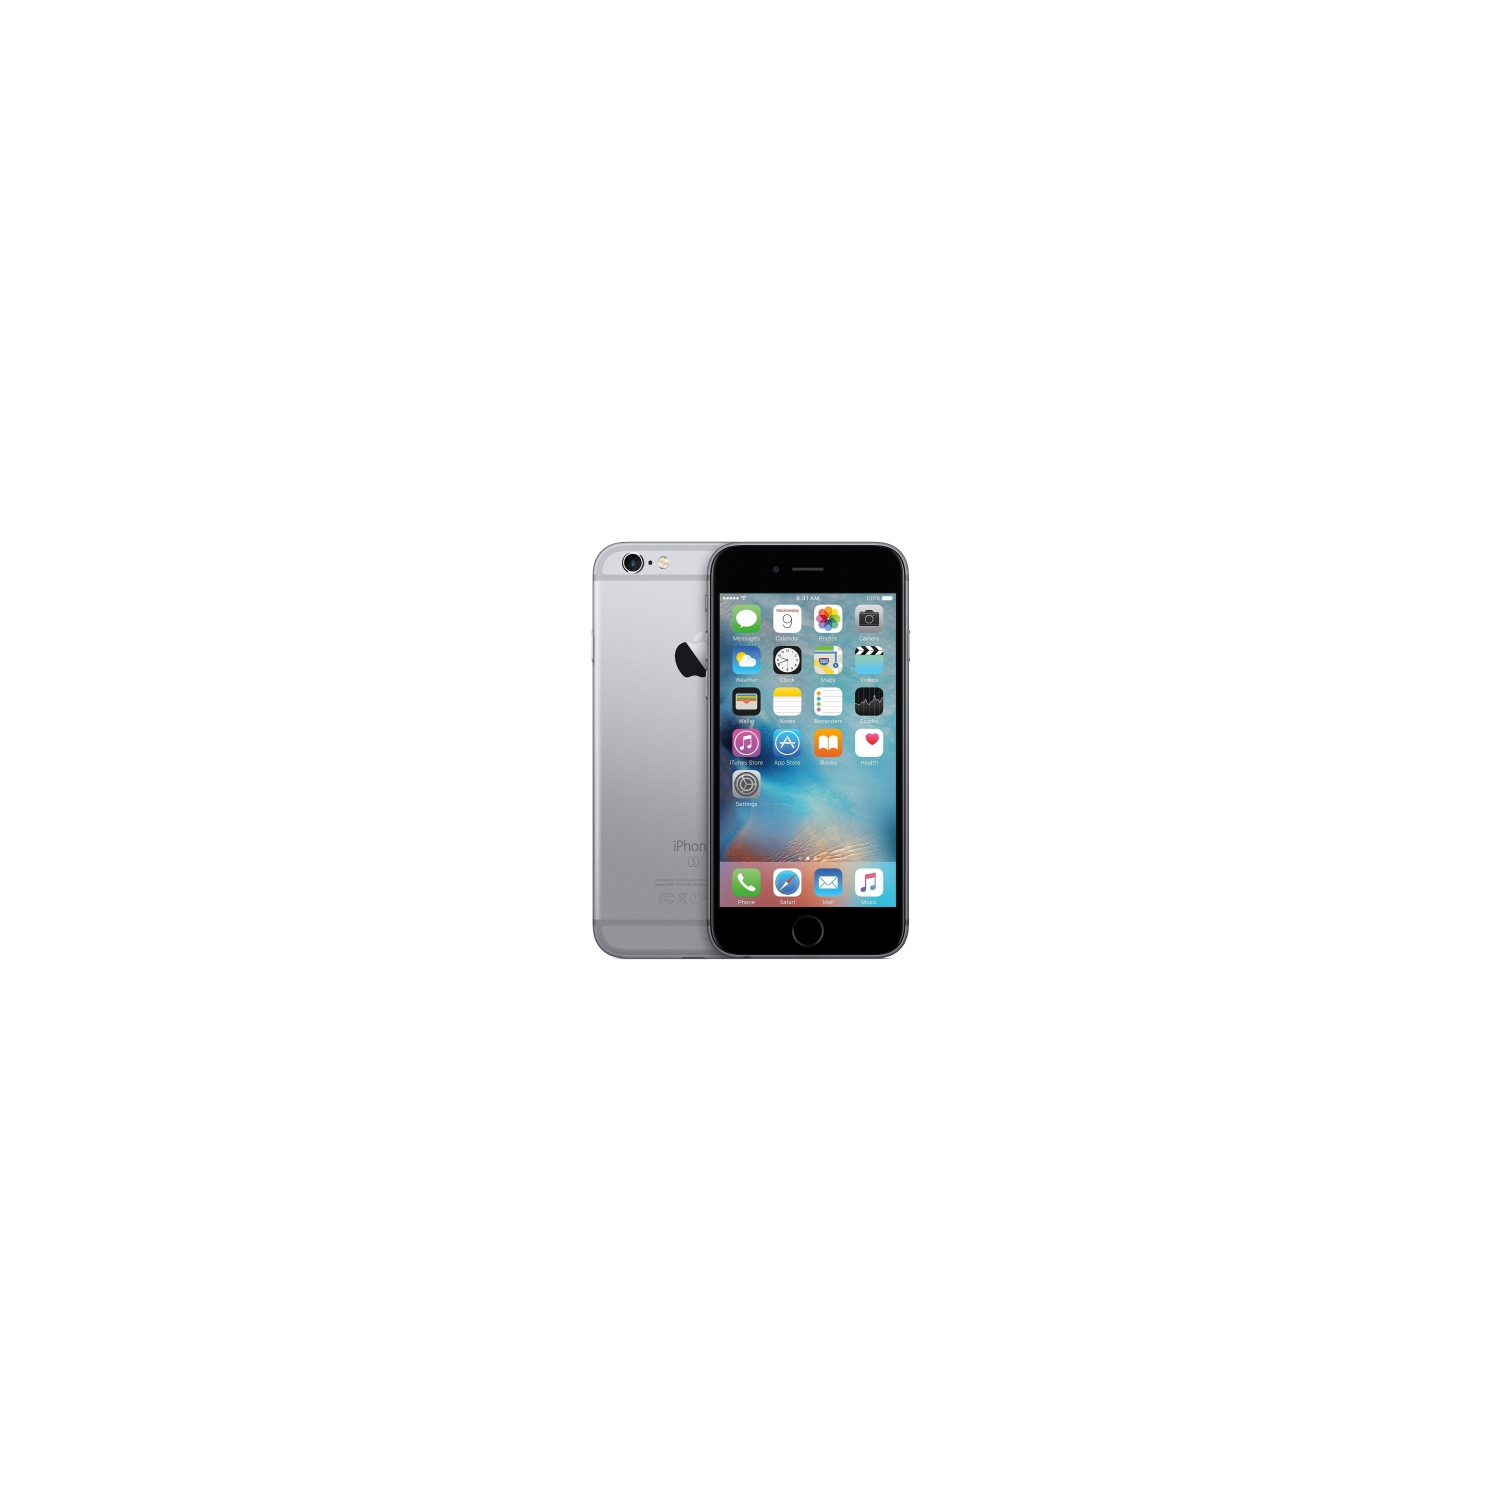 Apple iPhone 6s 32GB Smartphone - Space Gray - Unlocked - Certified Refurbished